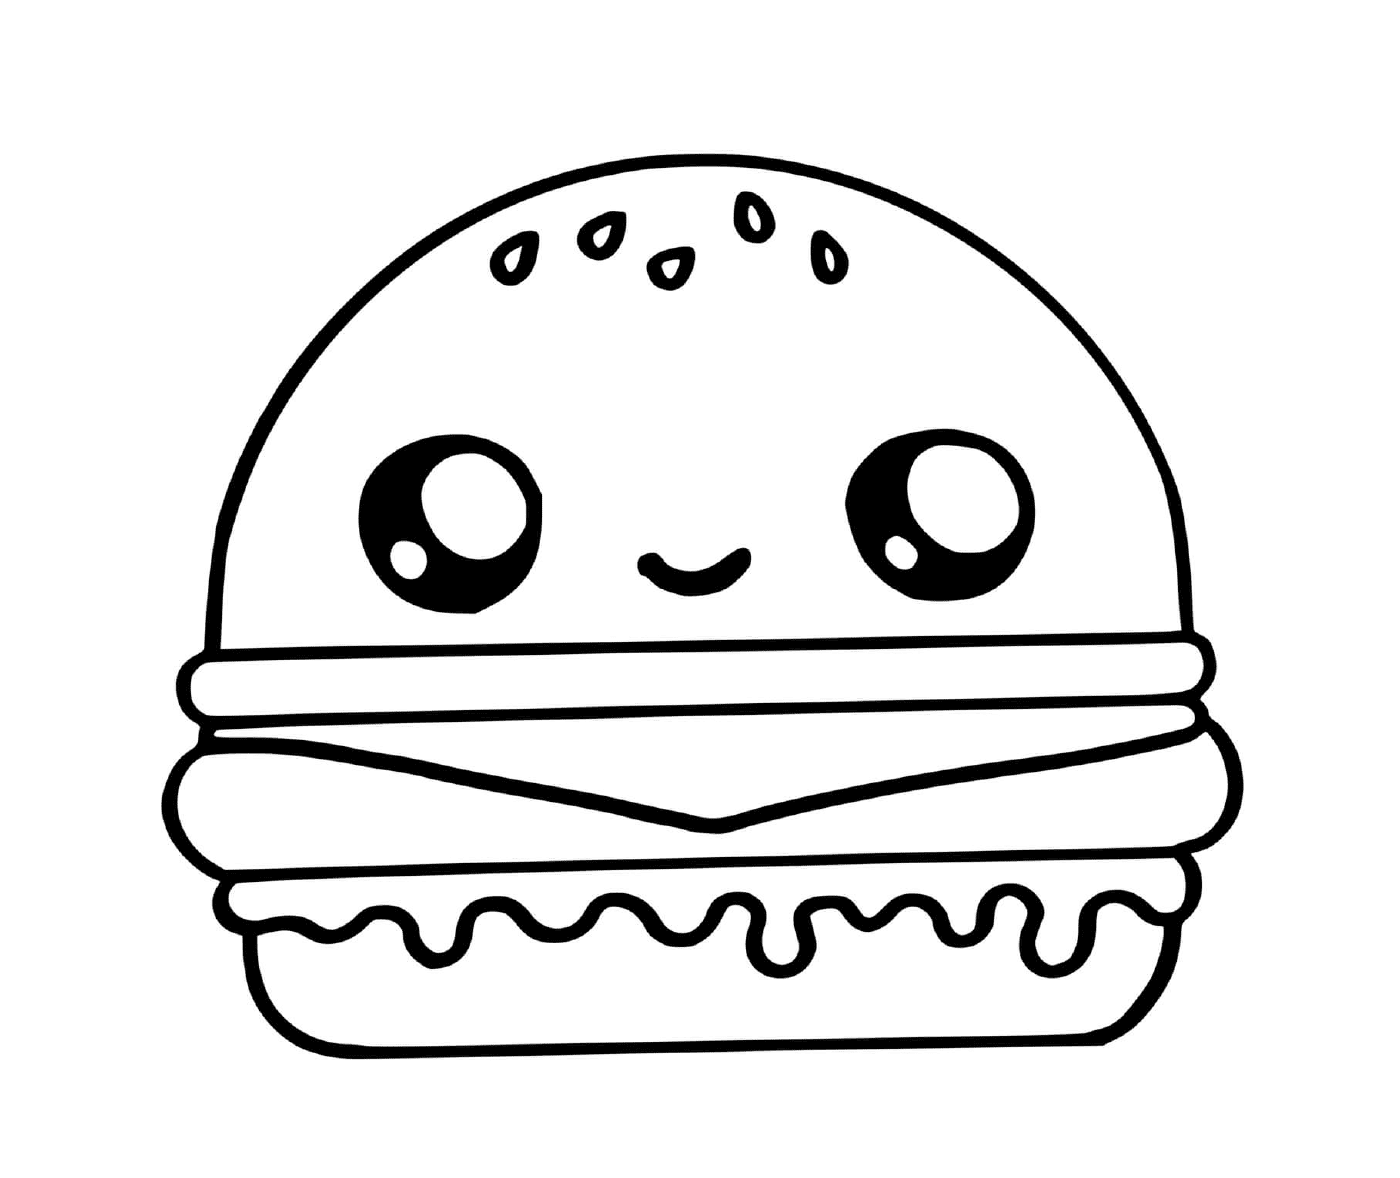  Hamburger kawaii, dolce delizia 